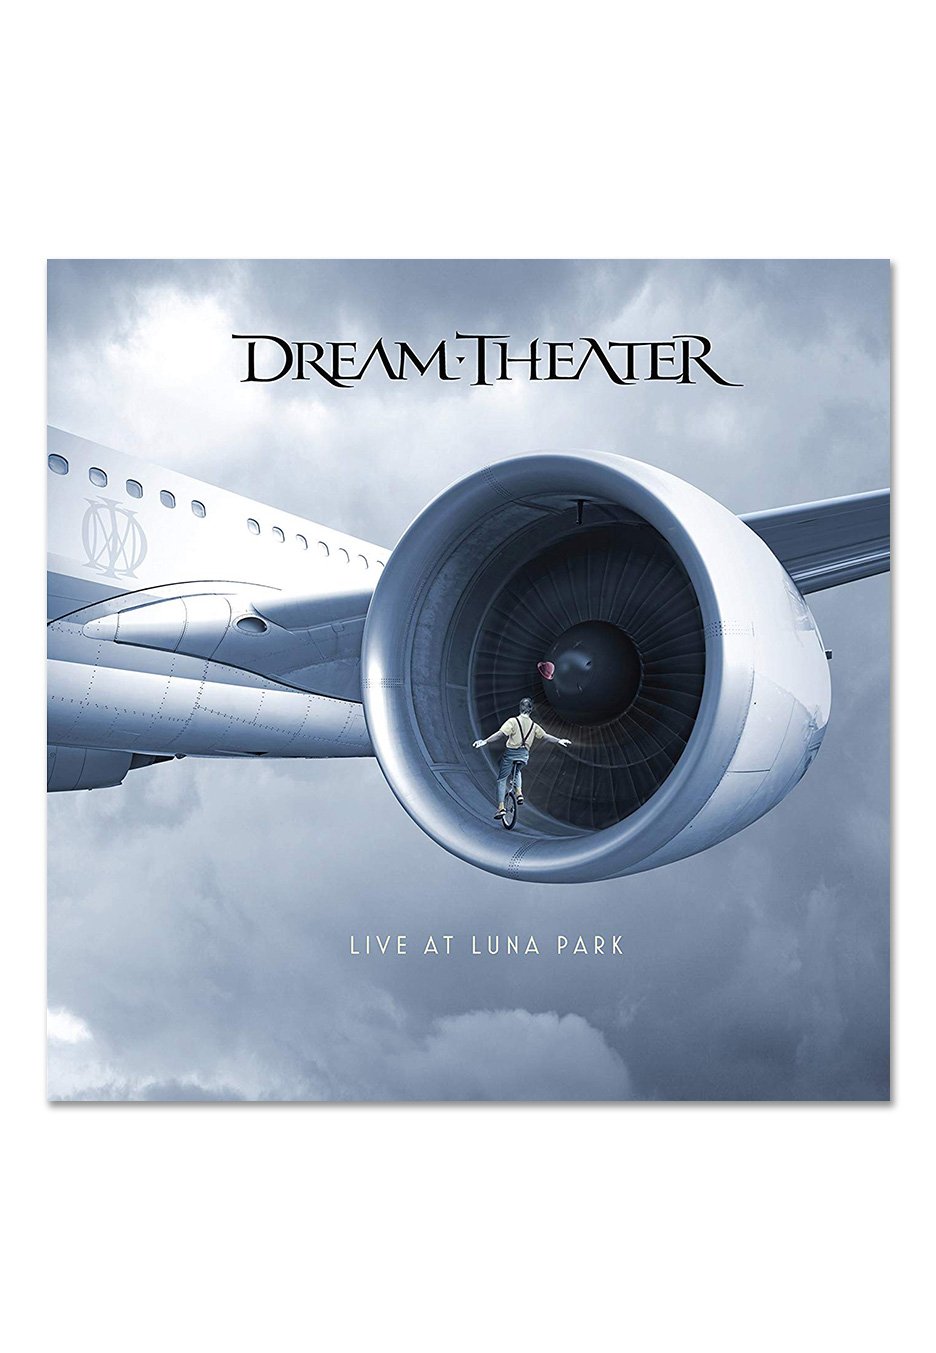 Dream Theater - Live At Luna Park (Limited) - Digipak 3 CD + 2 DVD